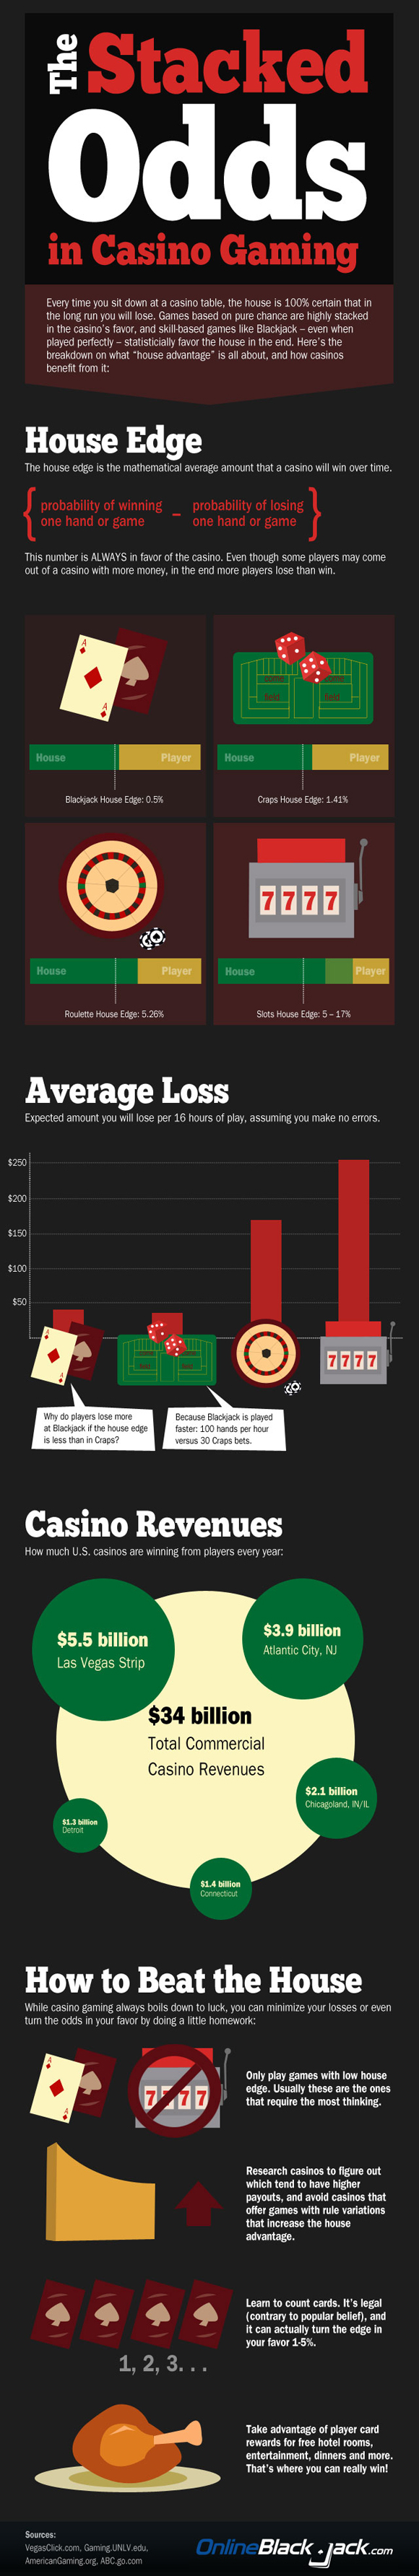 Casino house advantage infographic